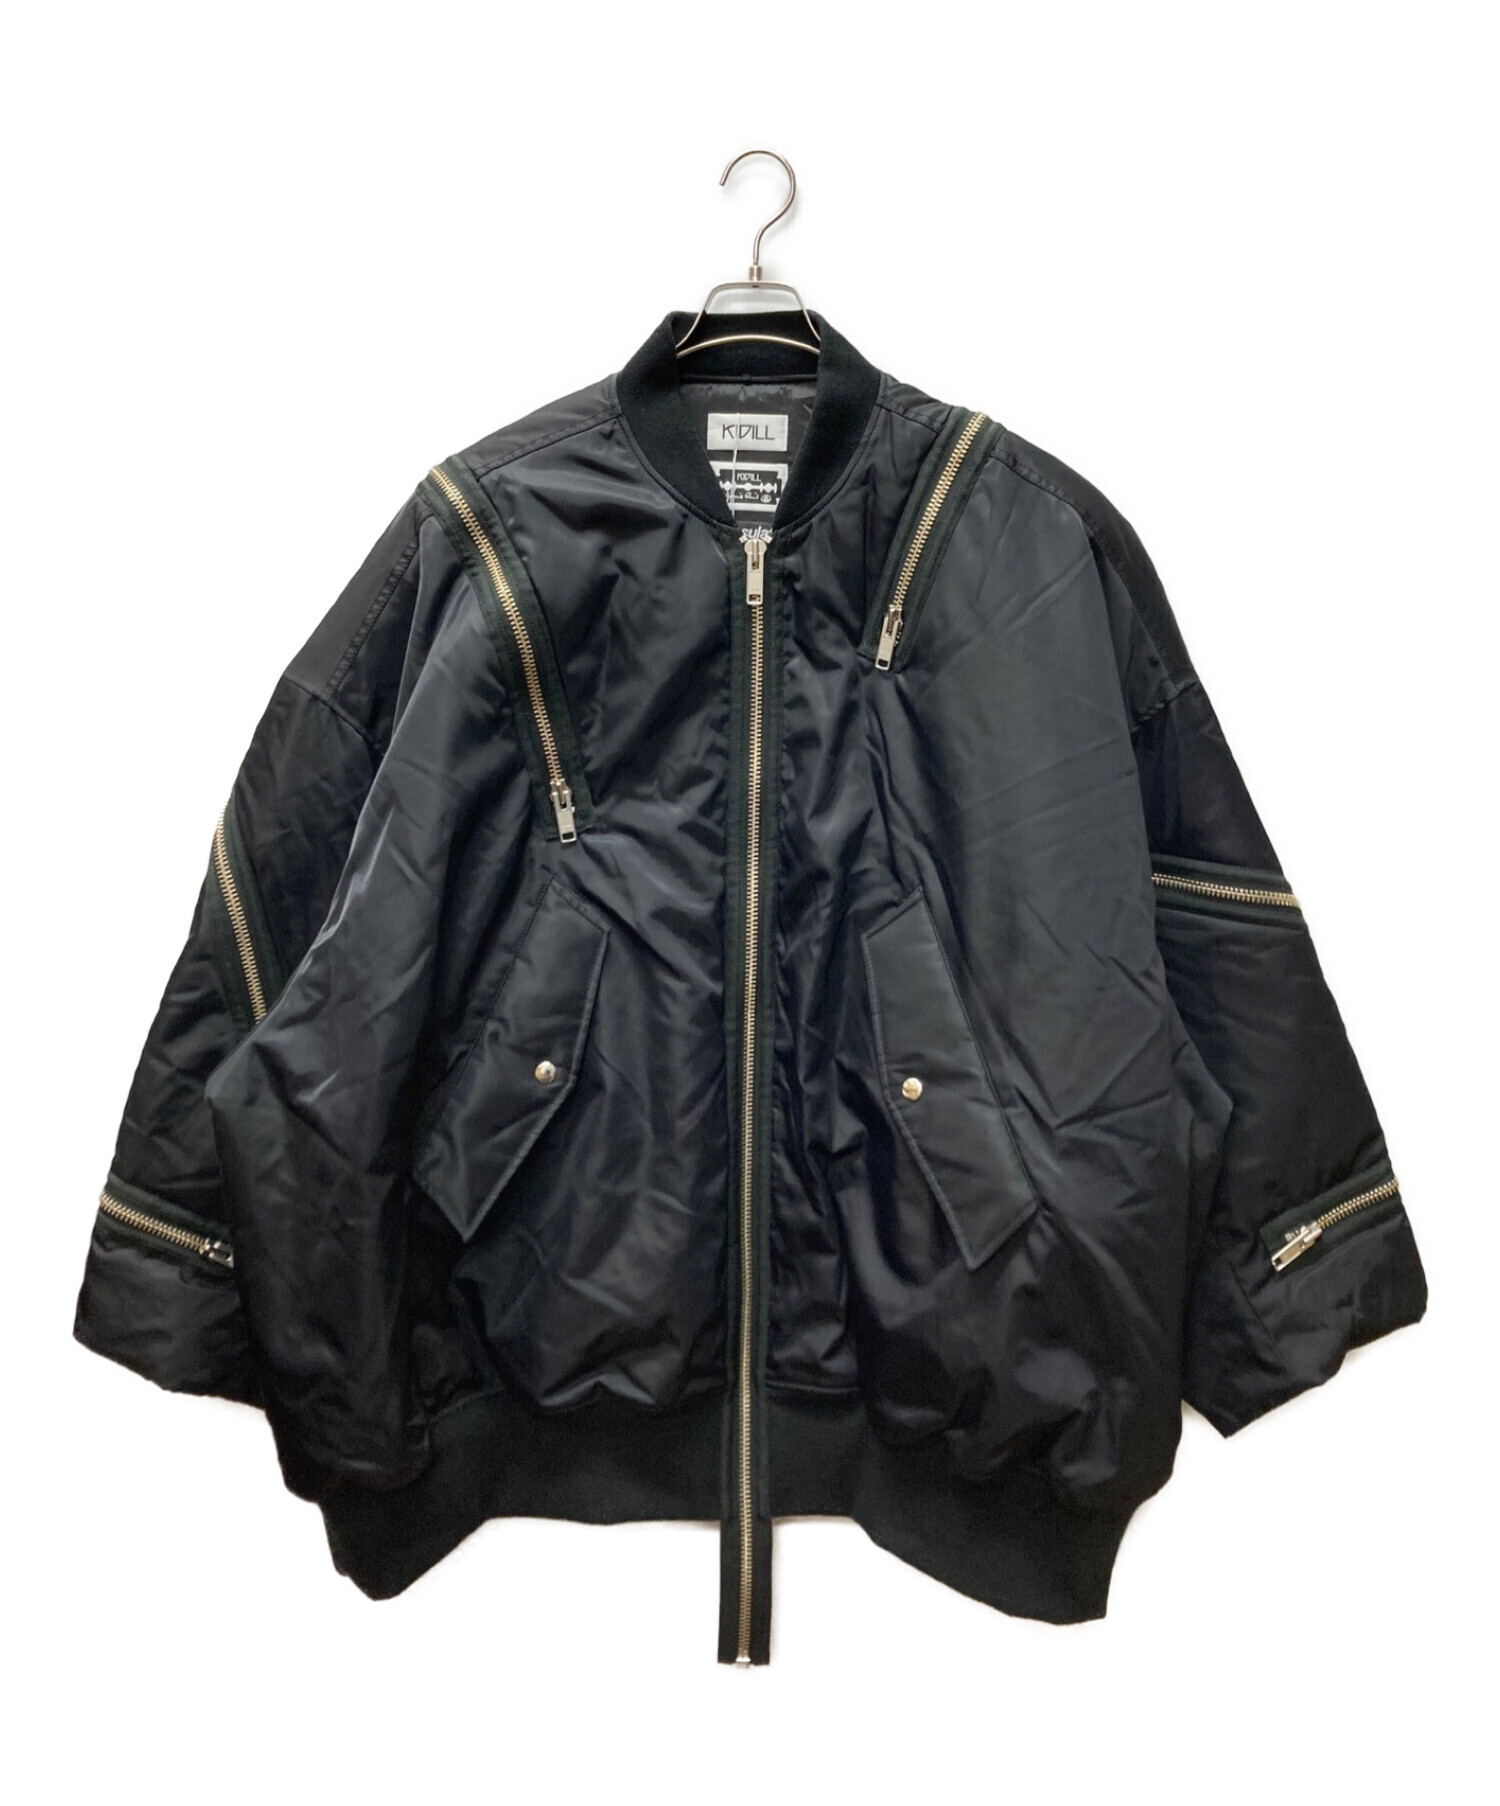 KIDILL (キディル) Jamie Reid MA-1 Jacket ブラック サイズ:FREE